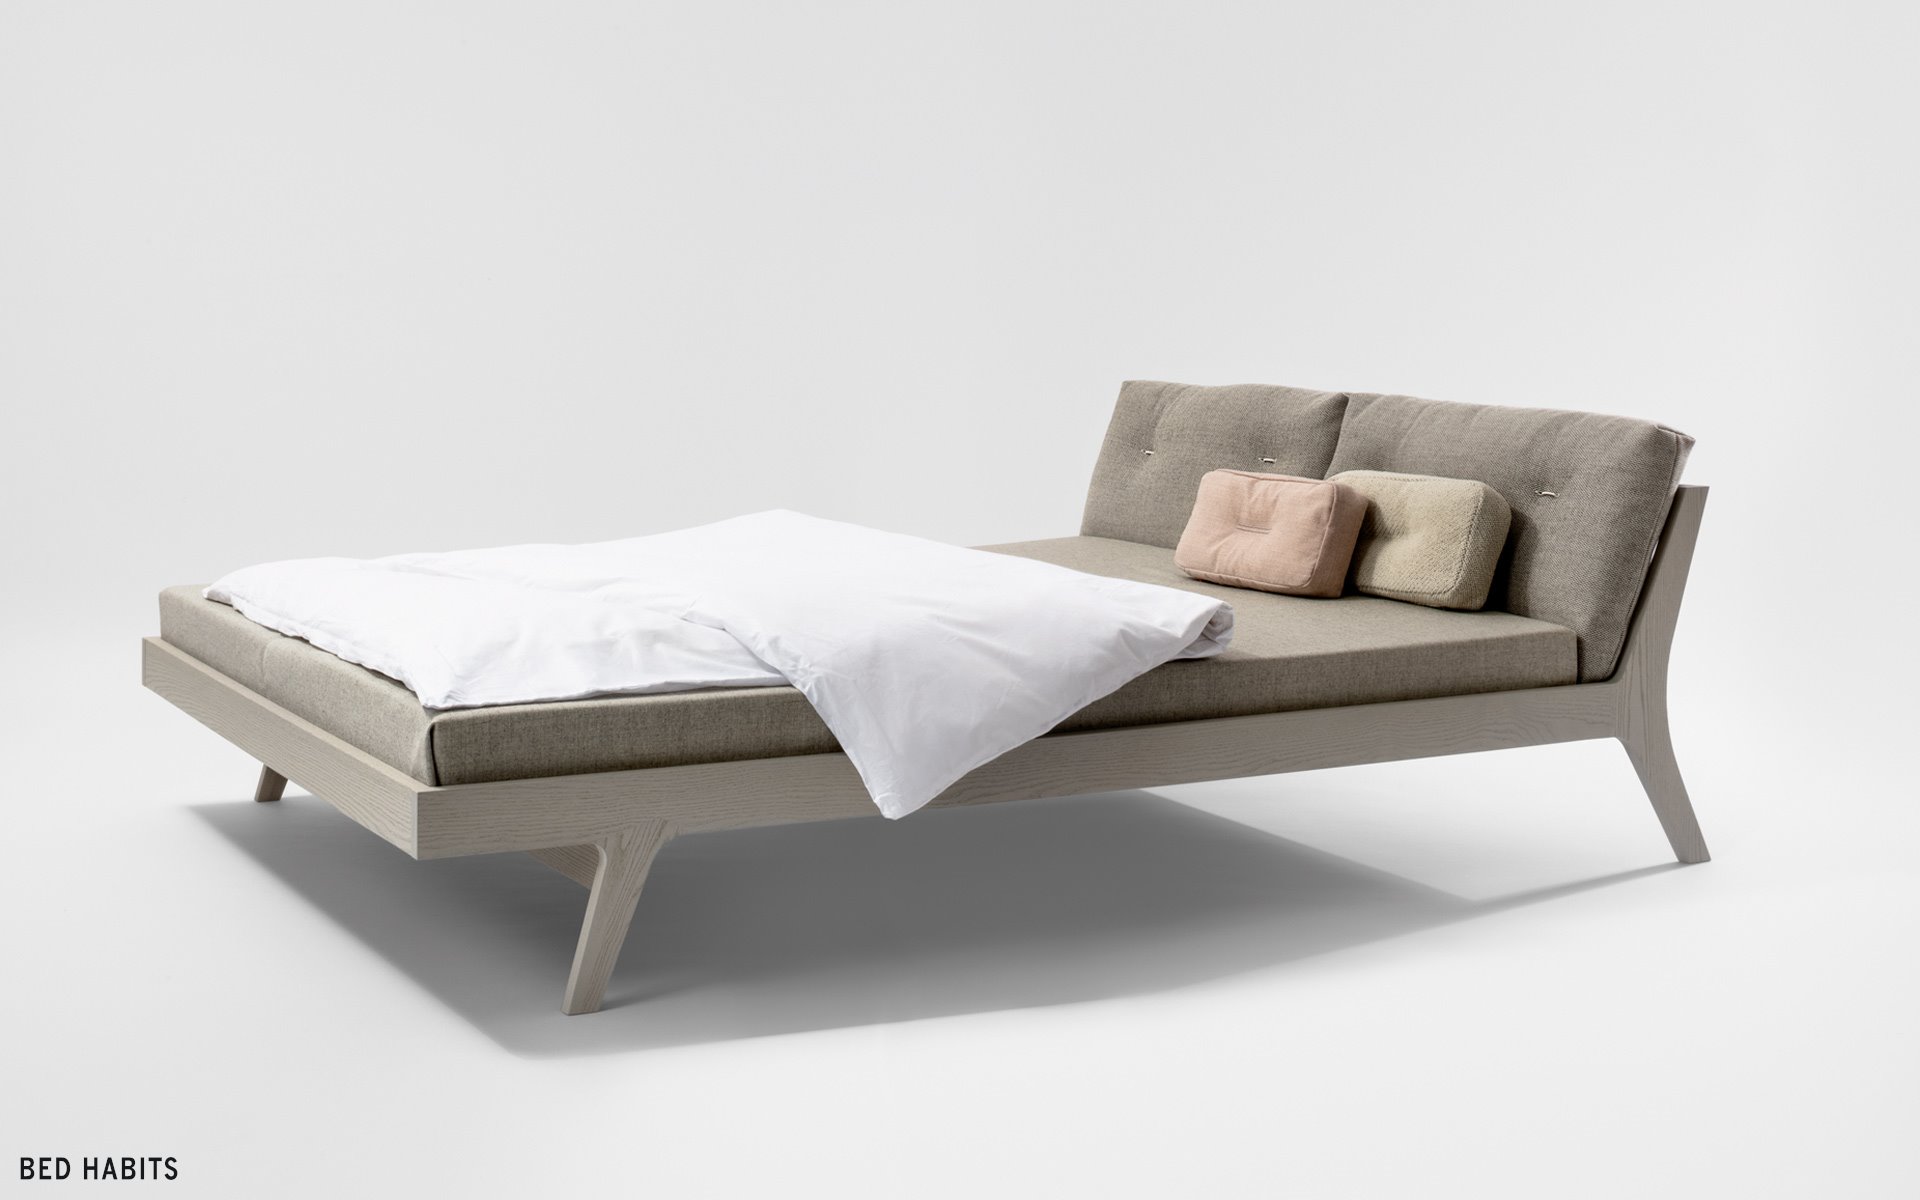 Designbed Z Mellow Bed Habits 1920x1200 41